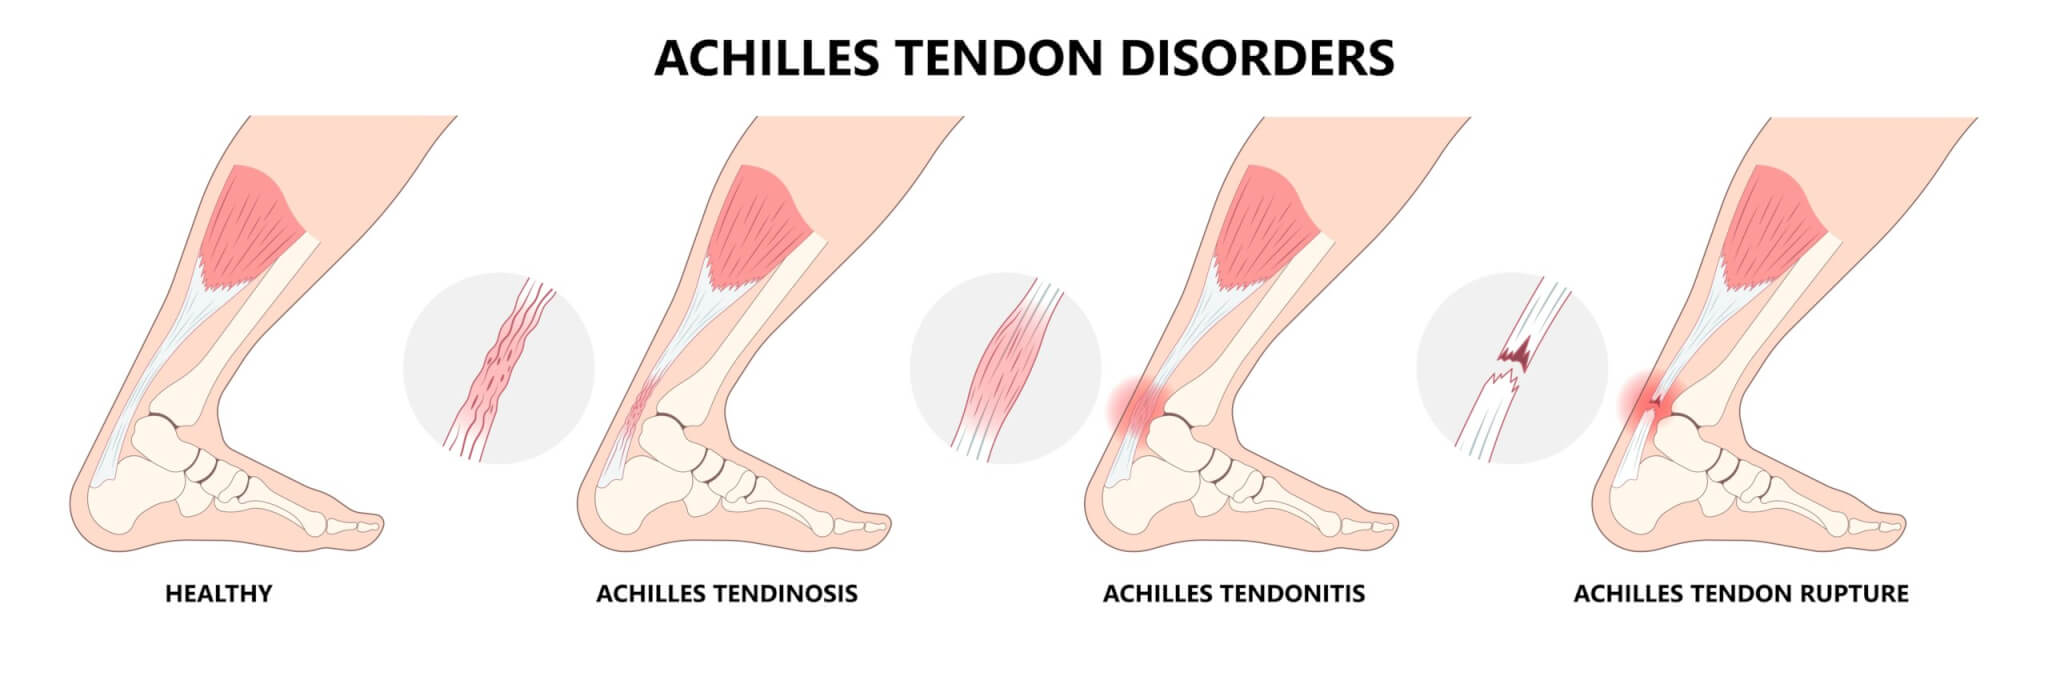 Achilles tendon injuries